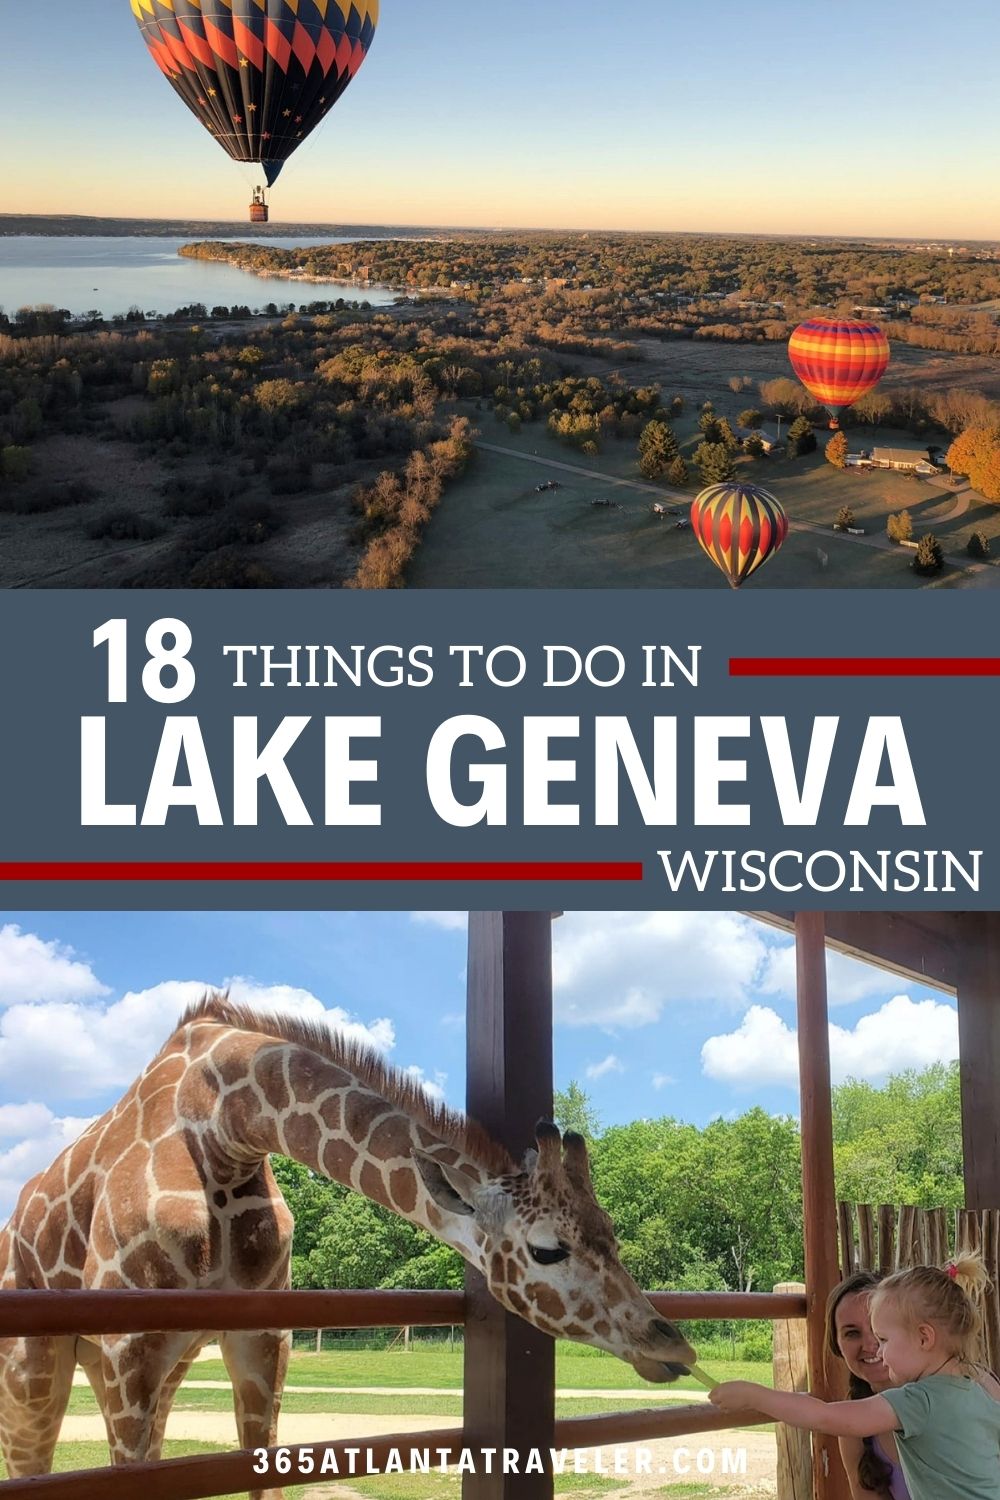 18 AMAZING THINGS TO DO IN LAKE GENEVA, WISCONSIN